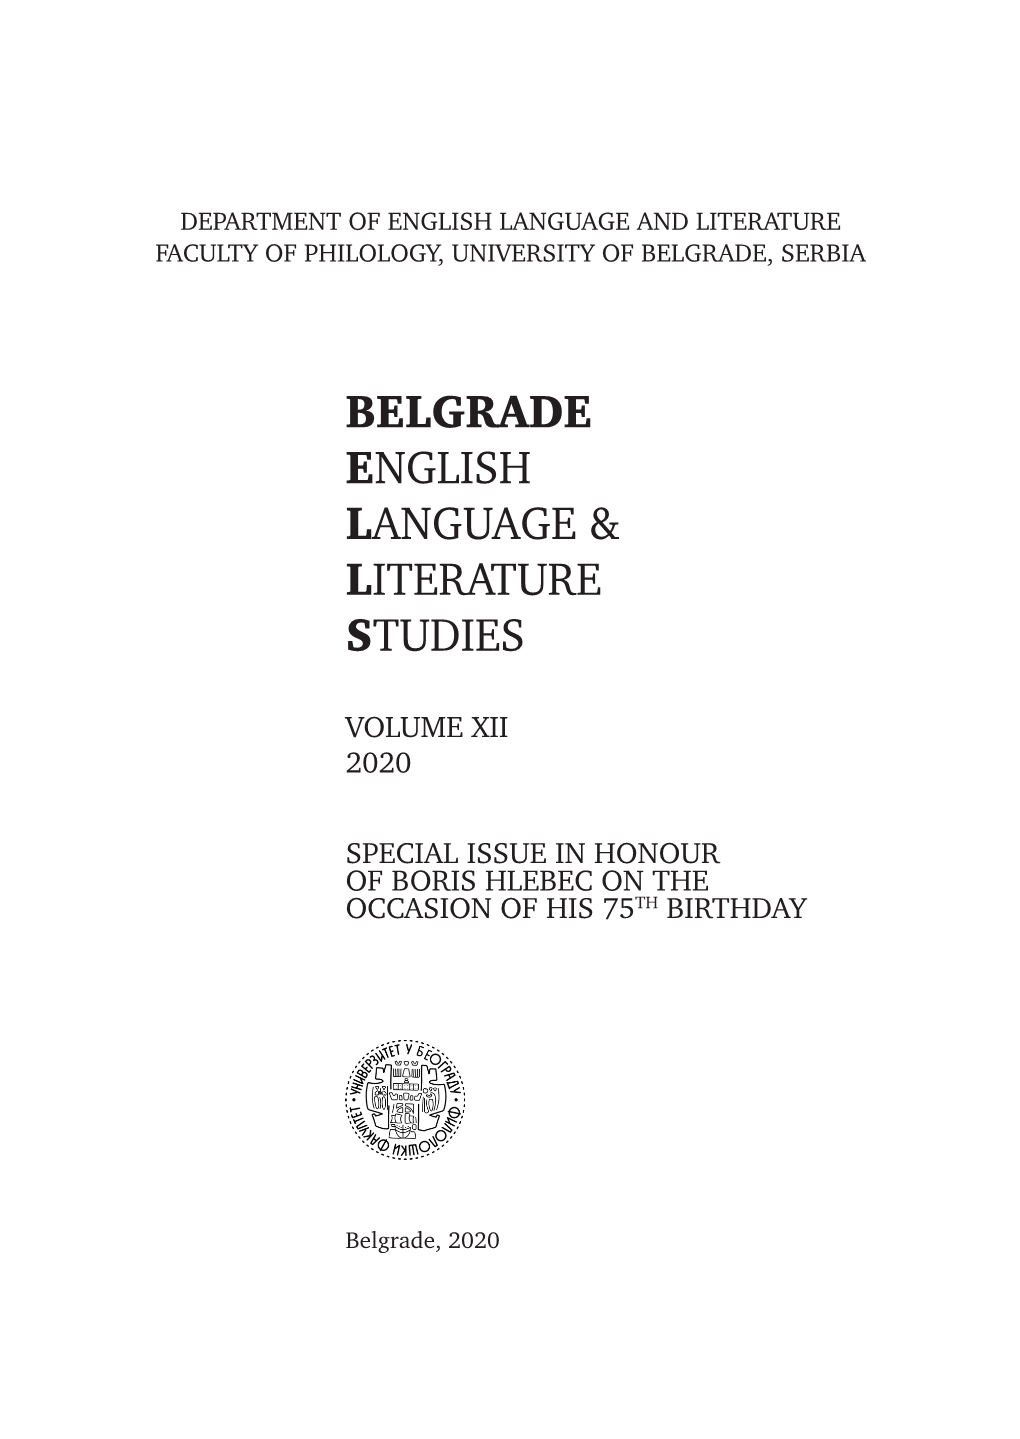 Belgrade English Language & Literature Studies